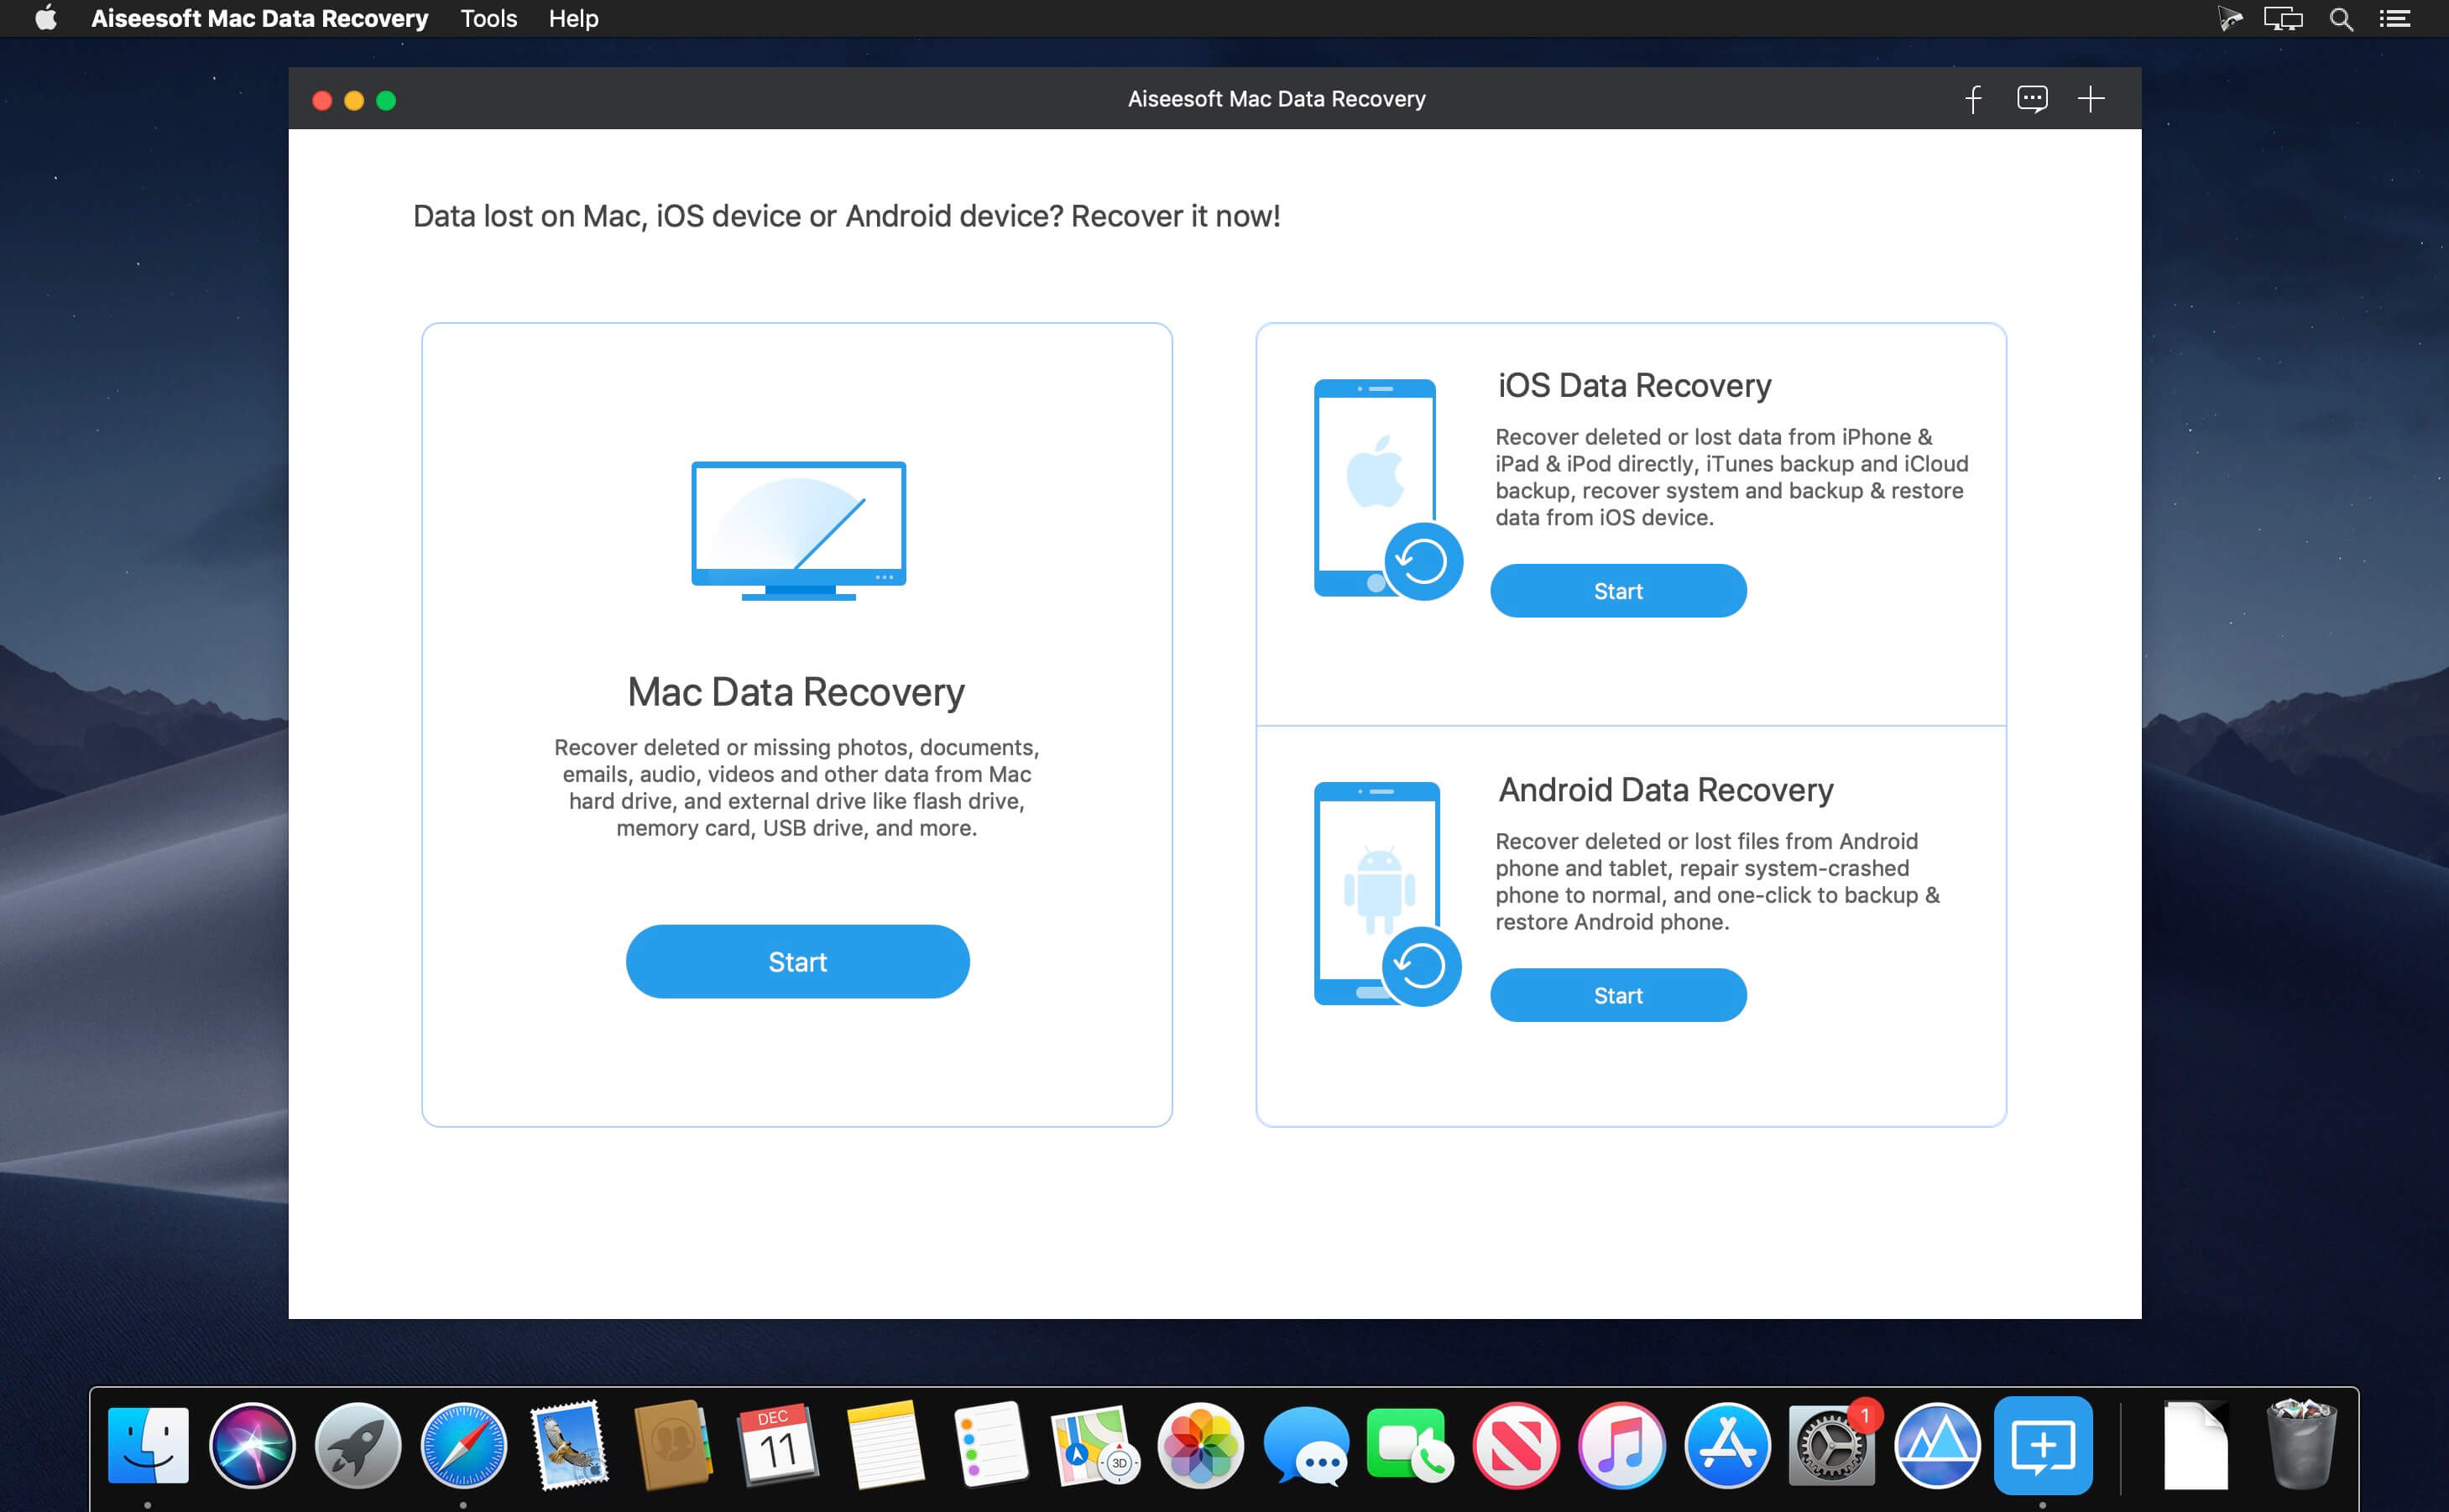 iskysoft data recovery mac keygen